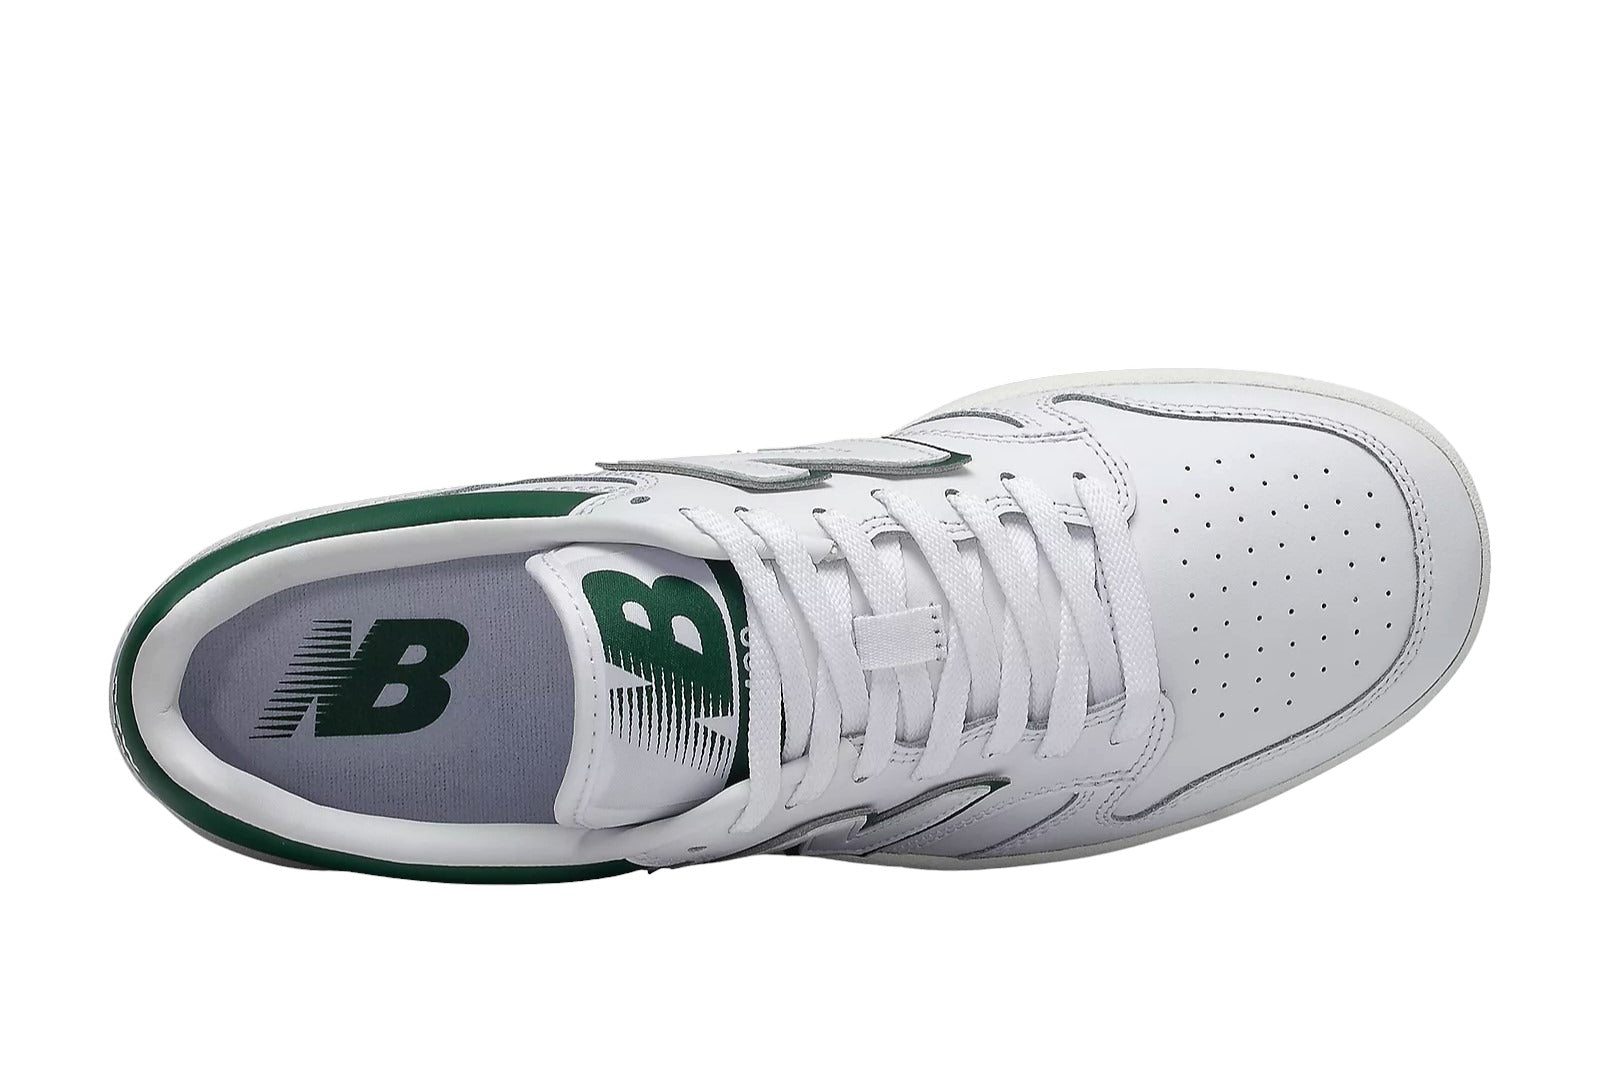 New Balance BB480 Sneaker - Men's